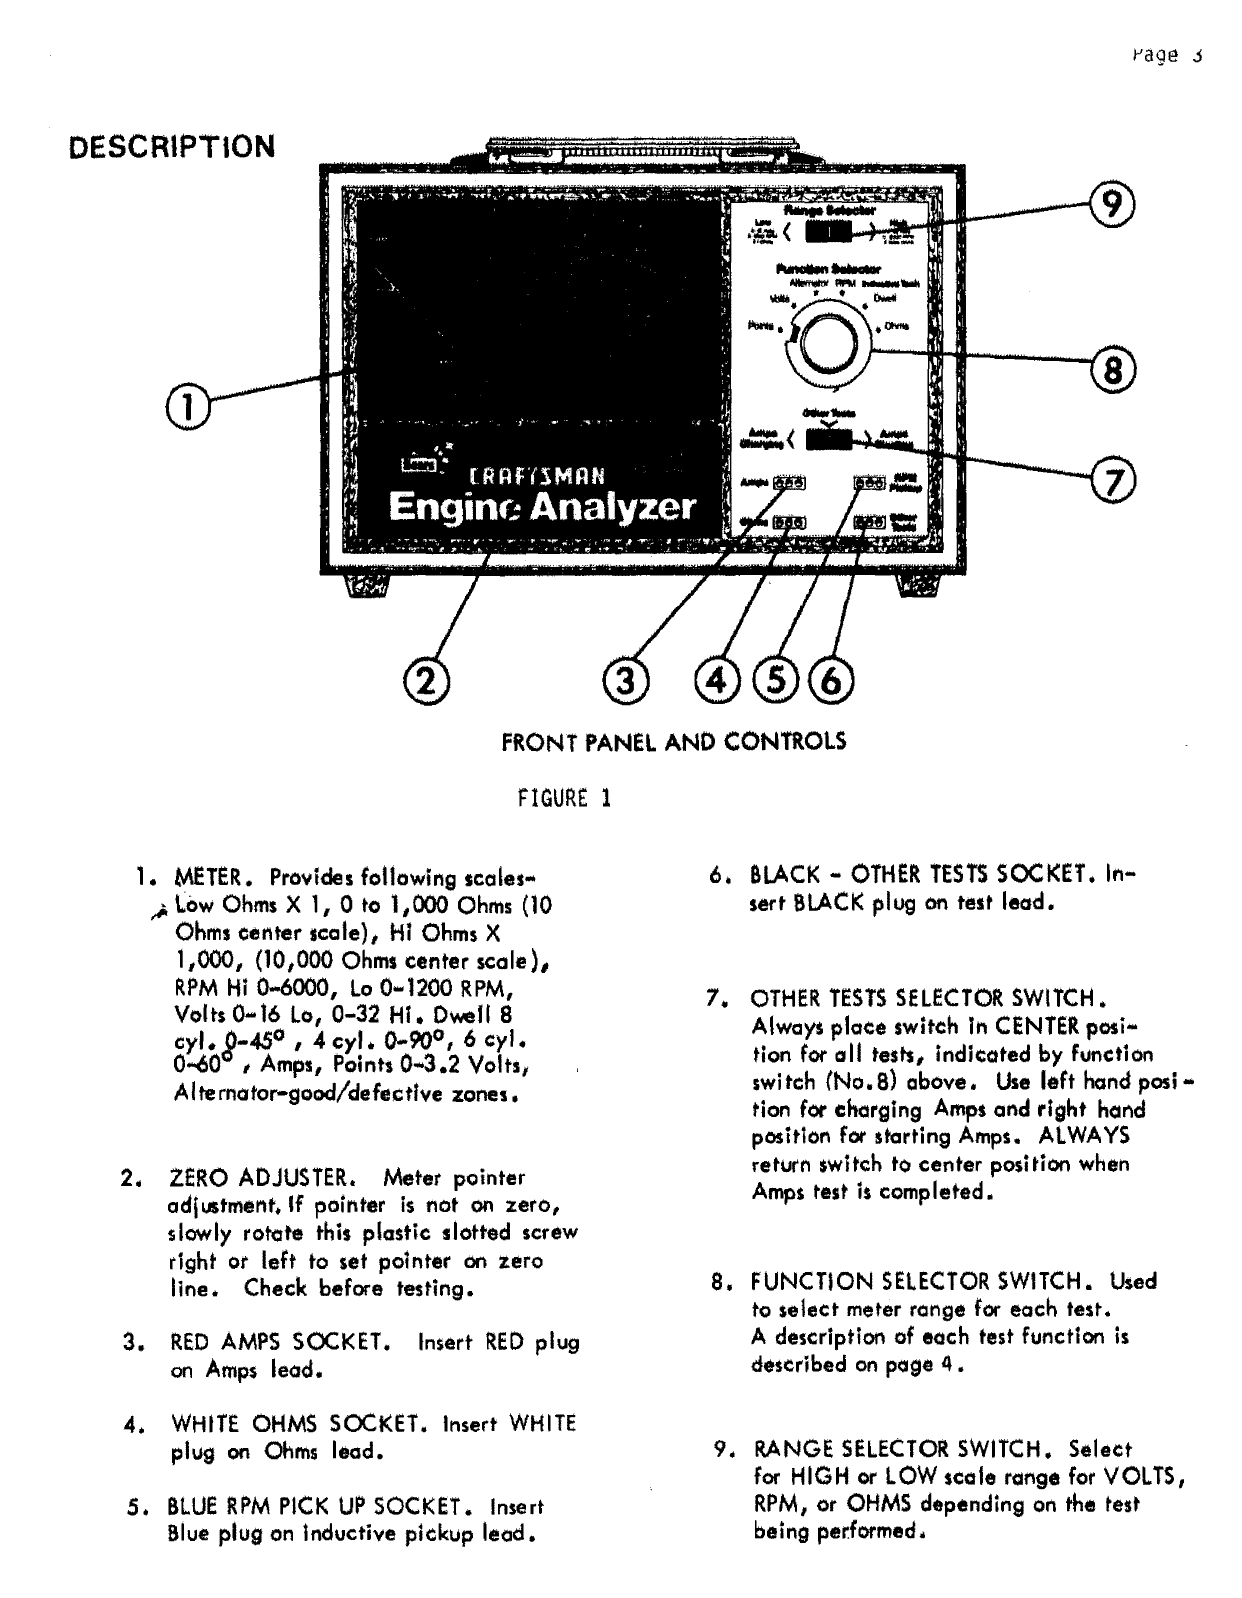 Original Tektronix Instruction Manual for the EAS Engine Analyzer System 